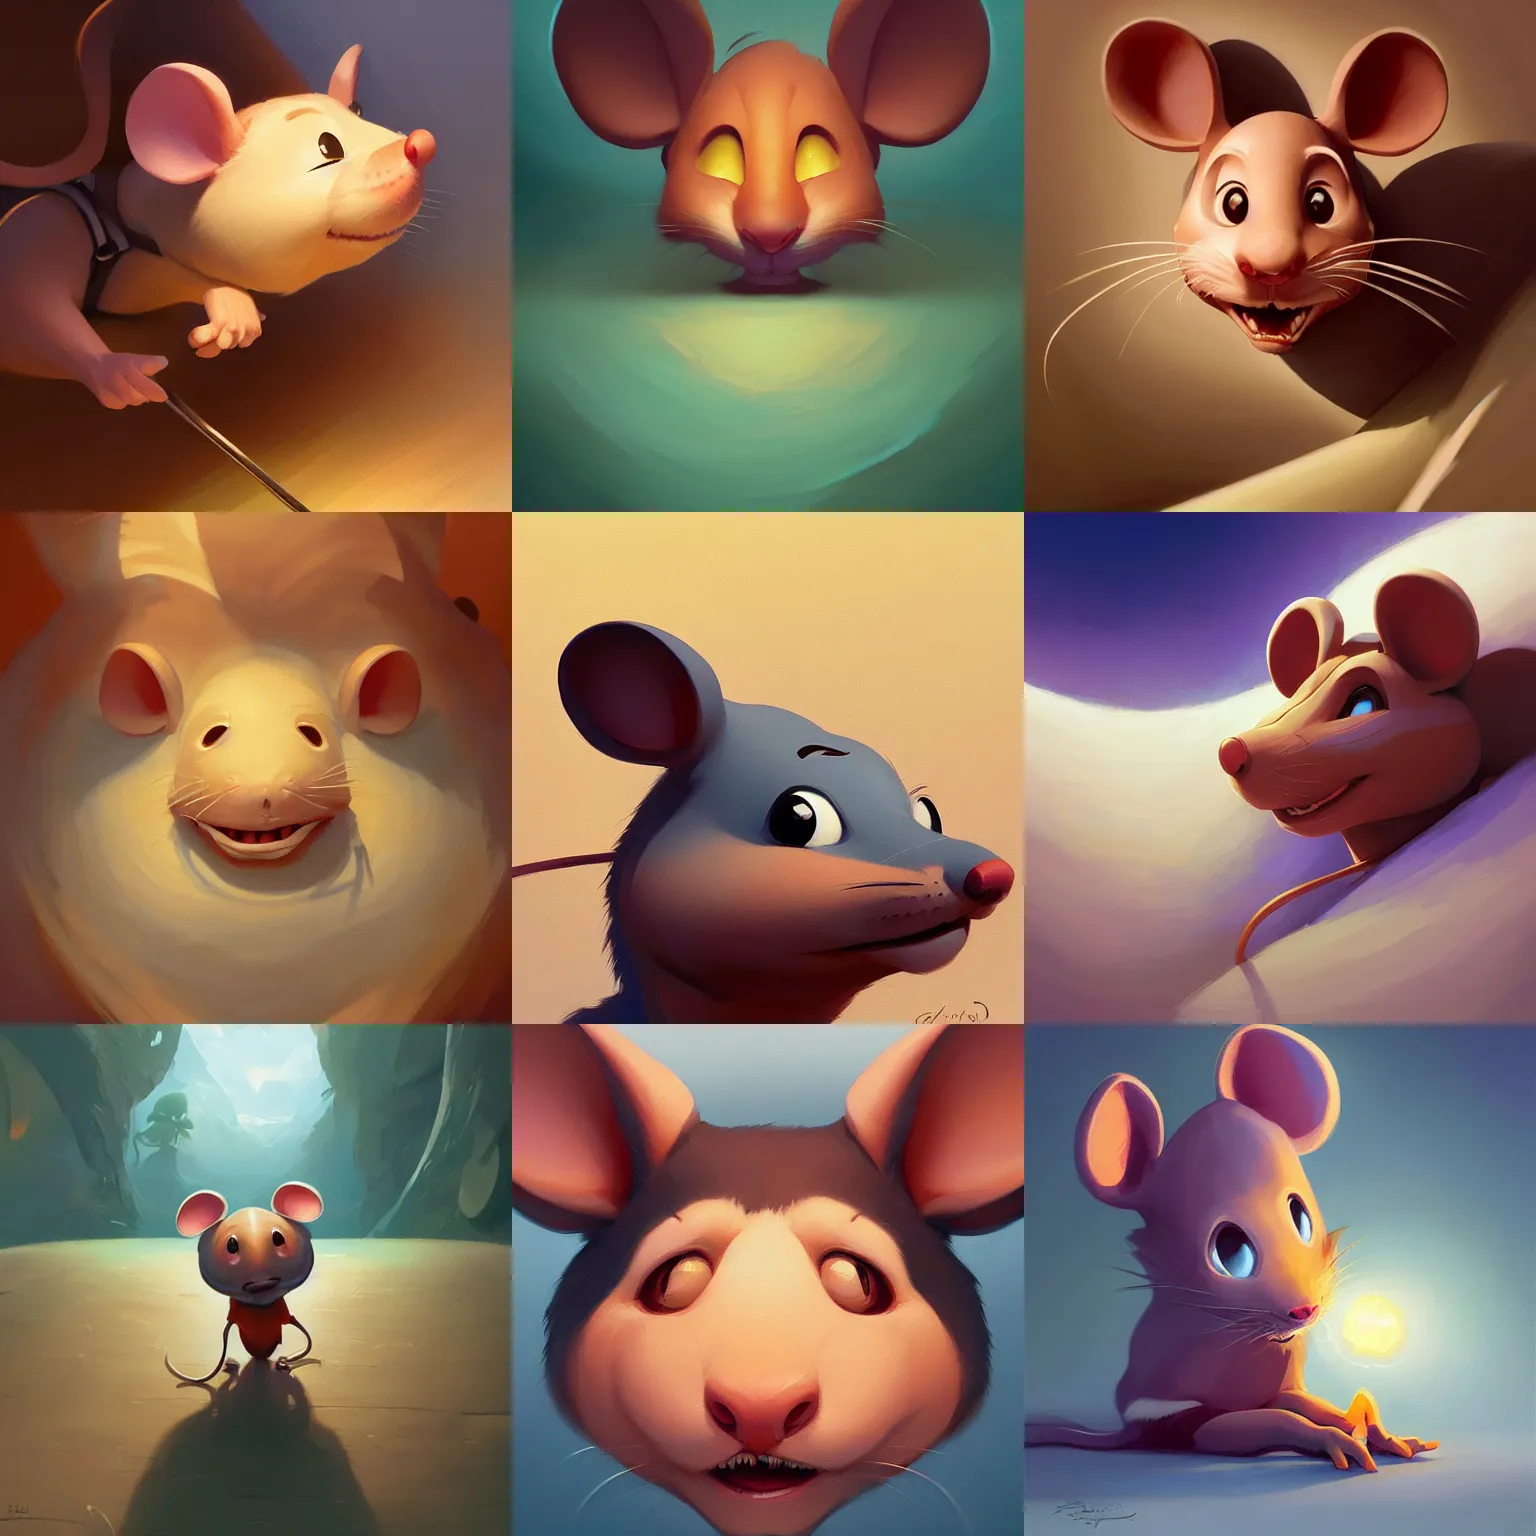 Prompt: anthropomorphic mouse face, loftis, cory behance hd by jesper ejsing, by rhads, makoto shinkai and lois van baarle, ilya kuvshinov, rossdraws global illumination